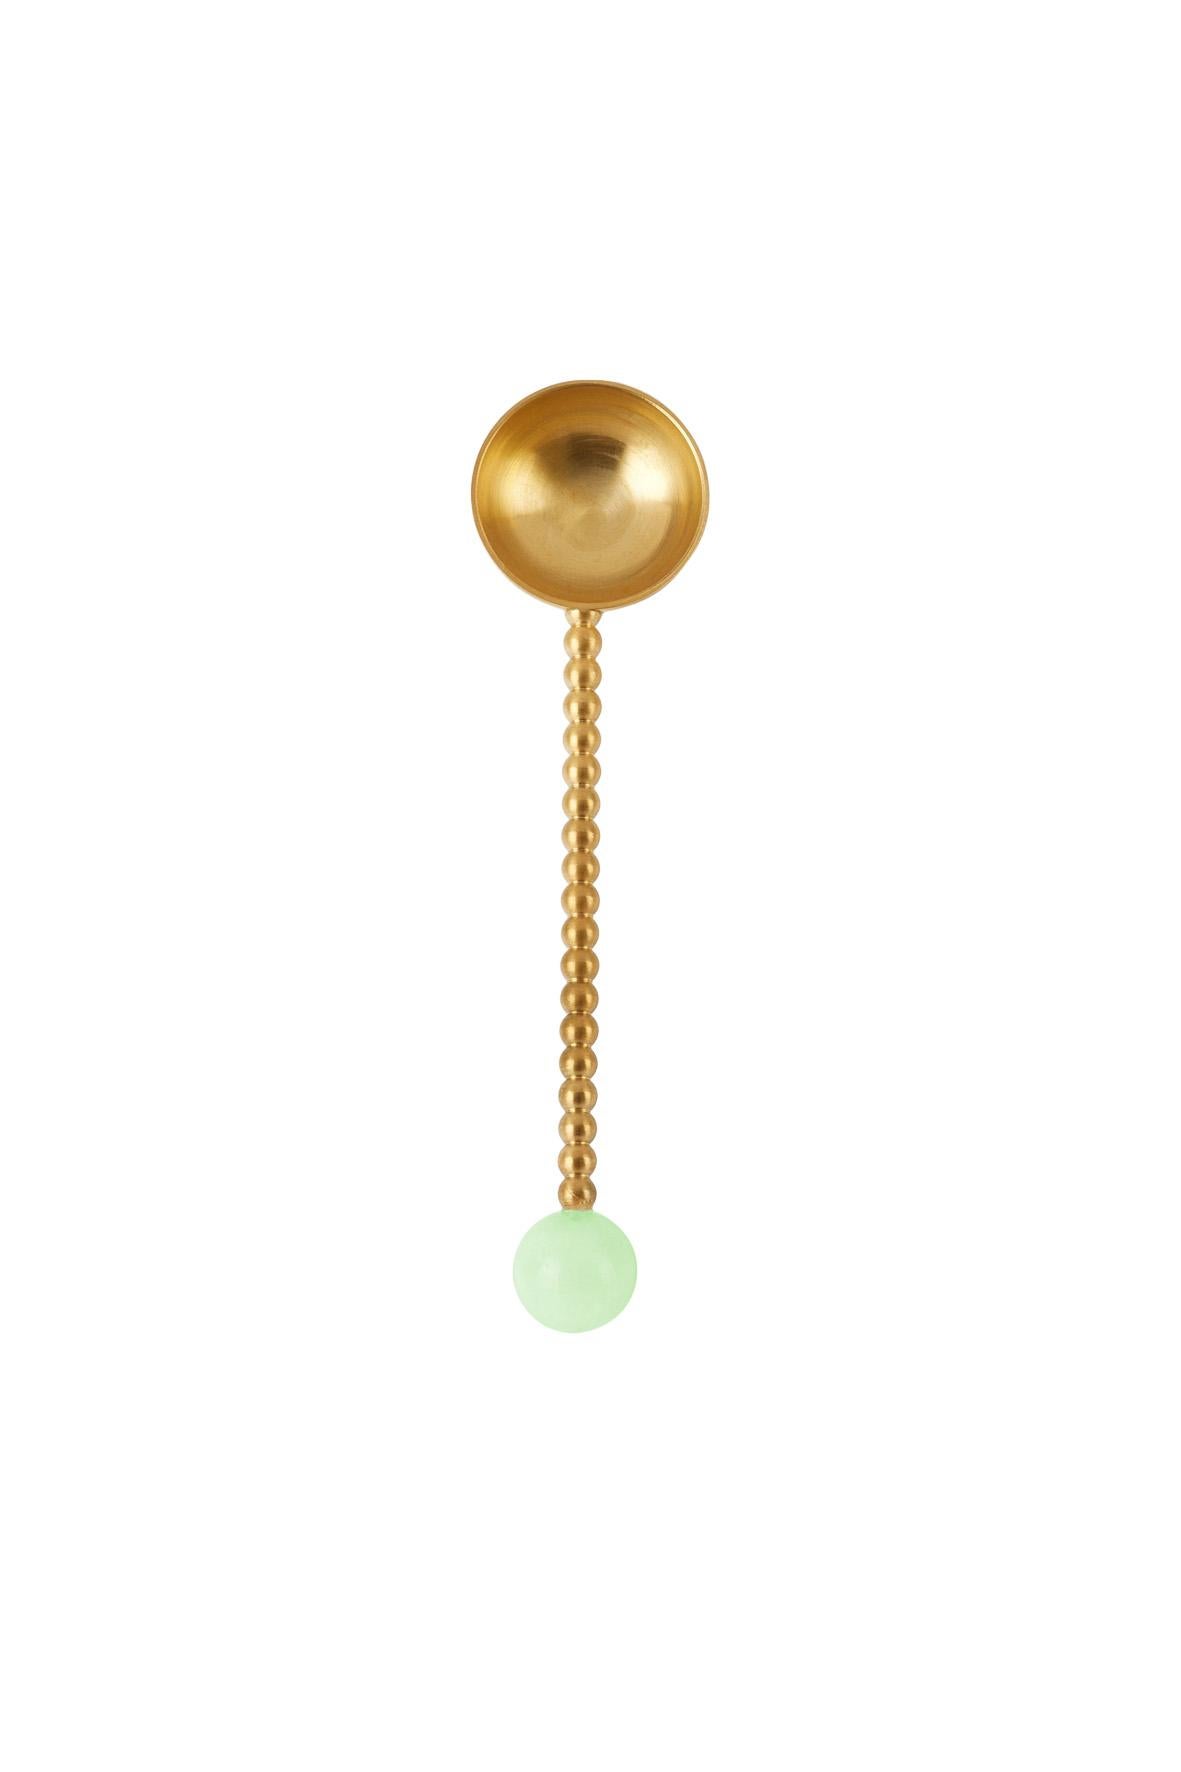 Modern Contemporary Gold Plated Spoon Green Quartz Stone Handcrafted Natalia Criado For Sale